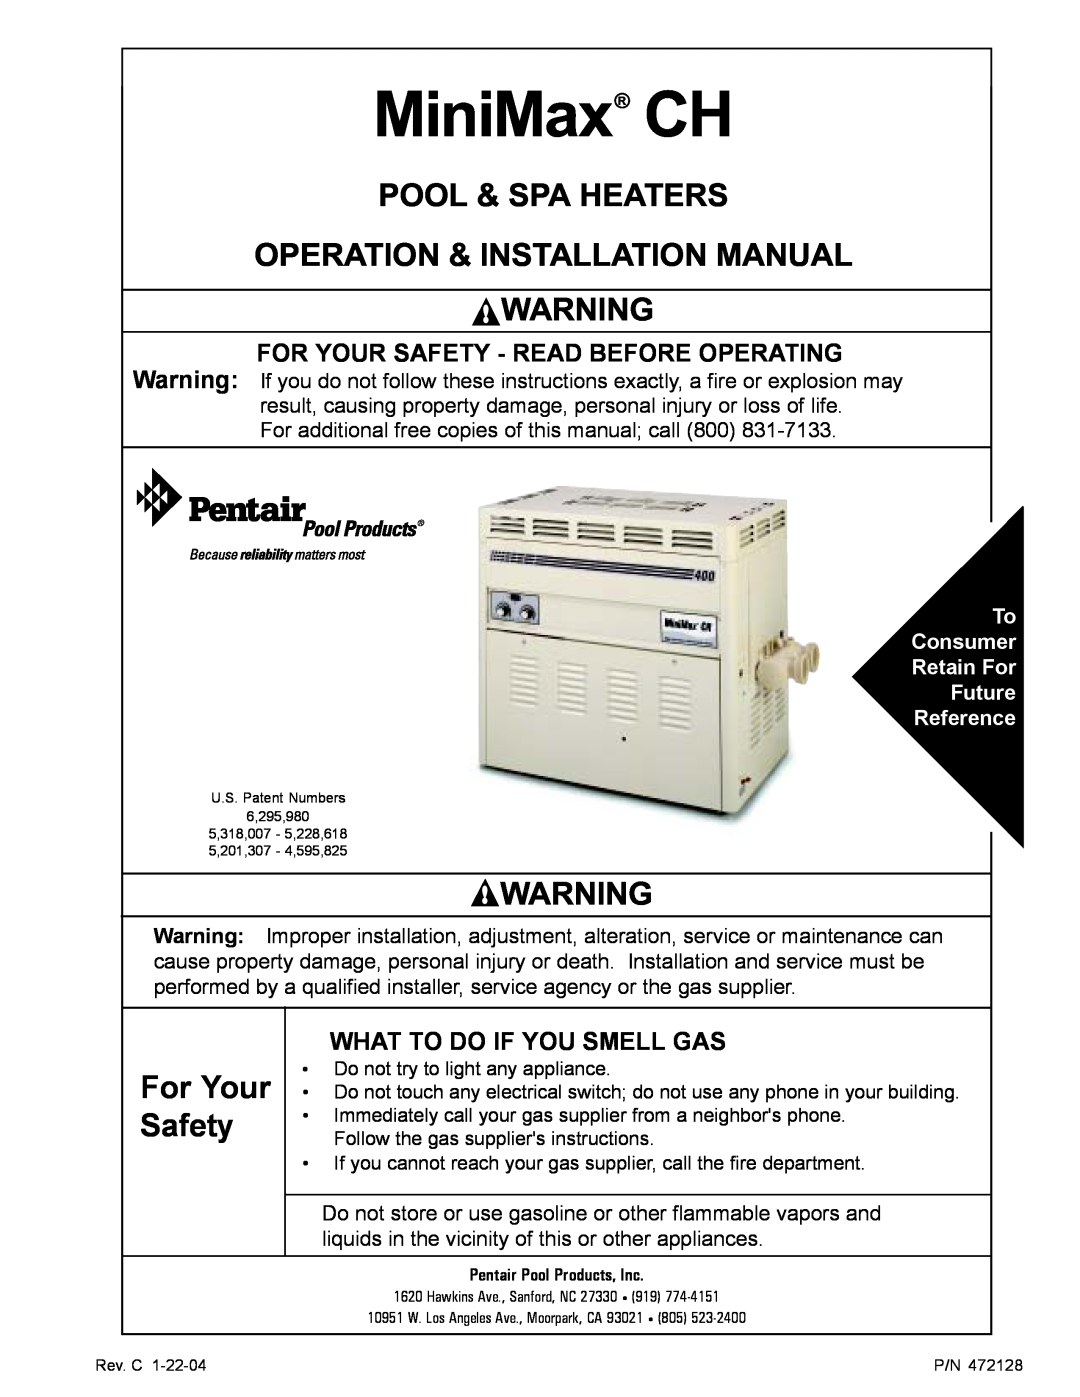 Pentair installation manual MiniMax CH, Pool & Spa Heaters, Operation & Installation Manual, For Your Safety 